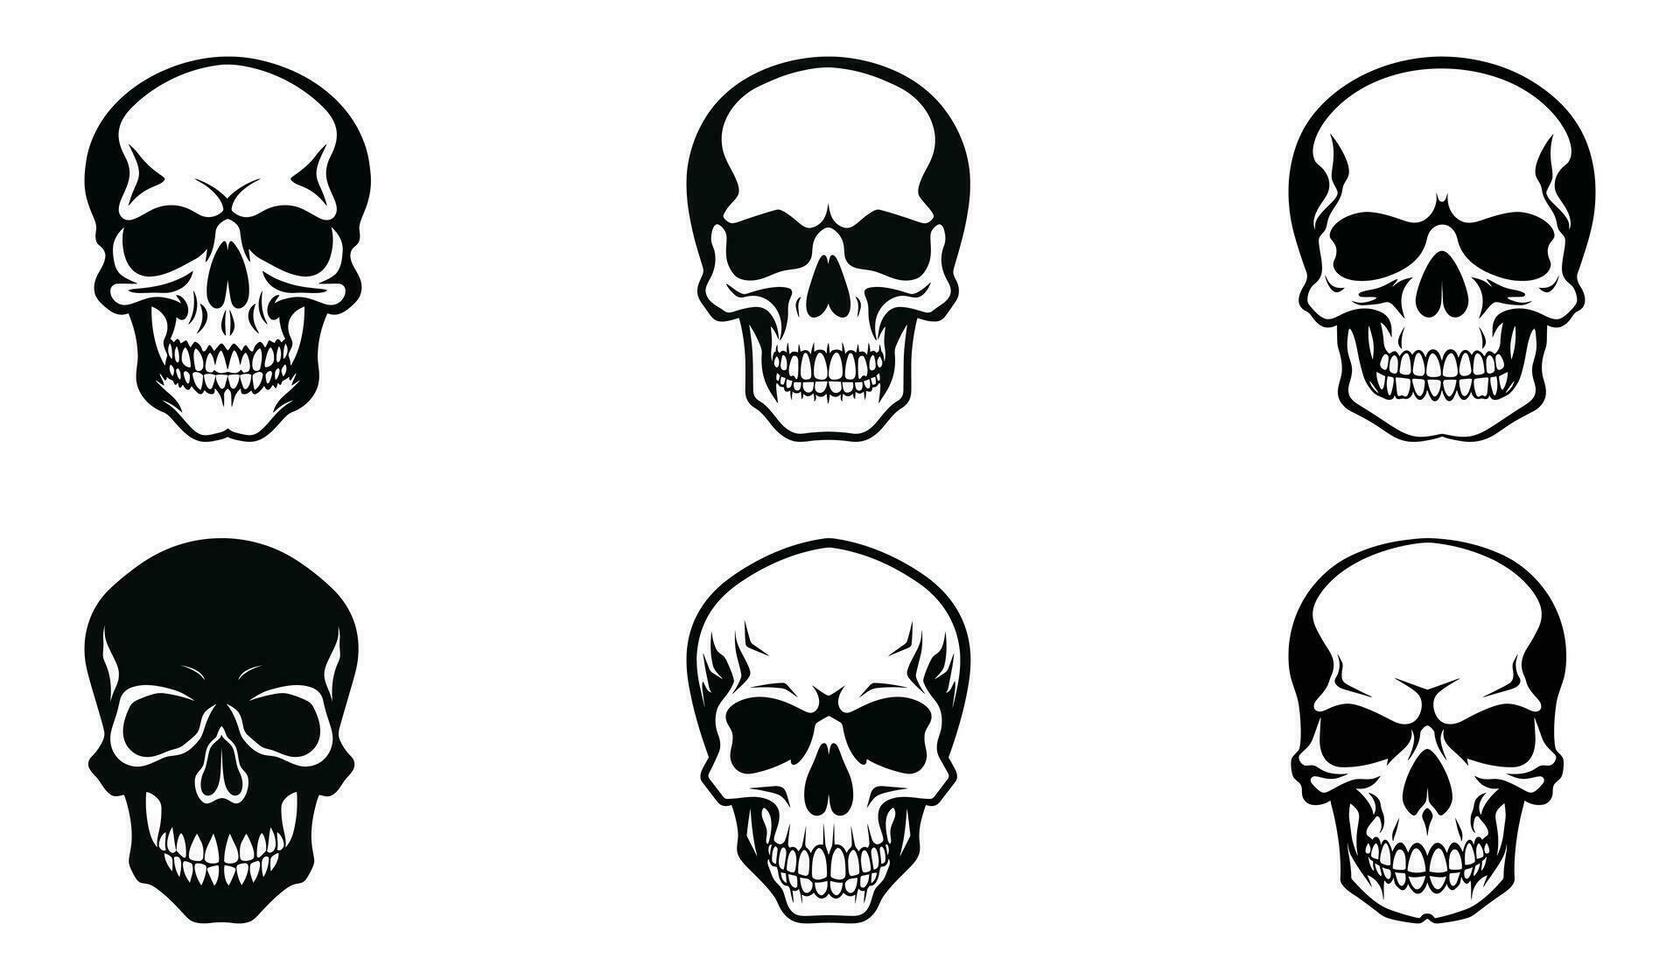 Ghostly Skull Ensemble vector